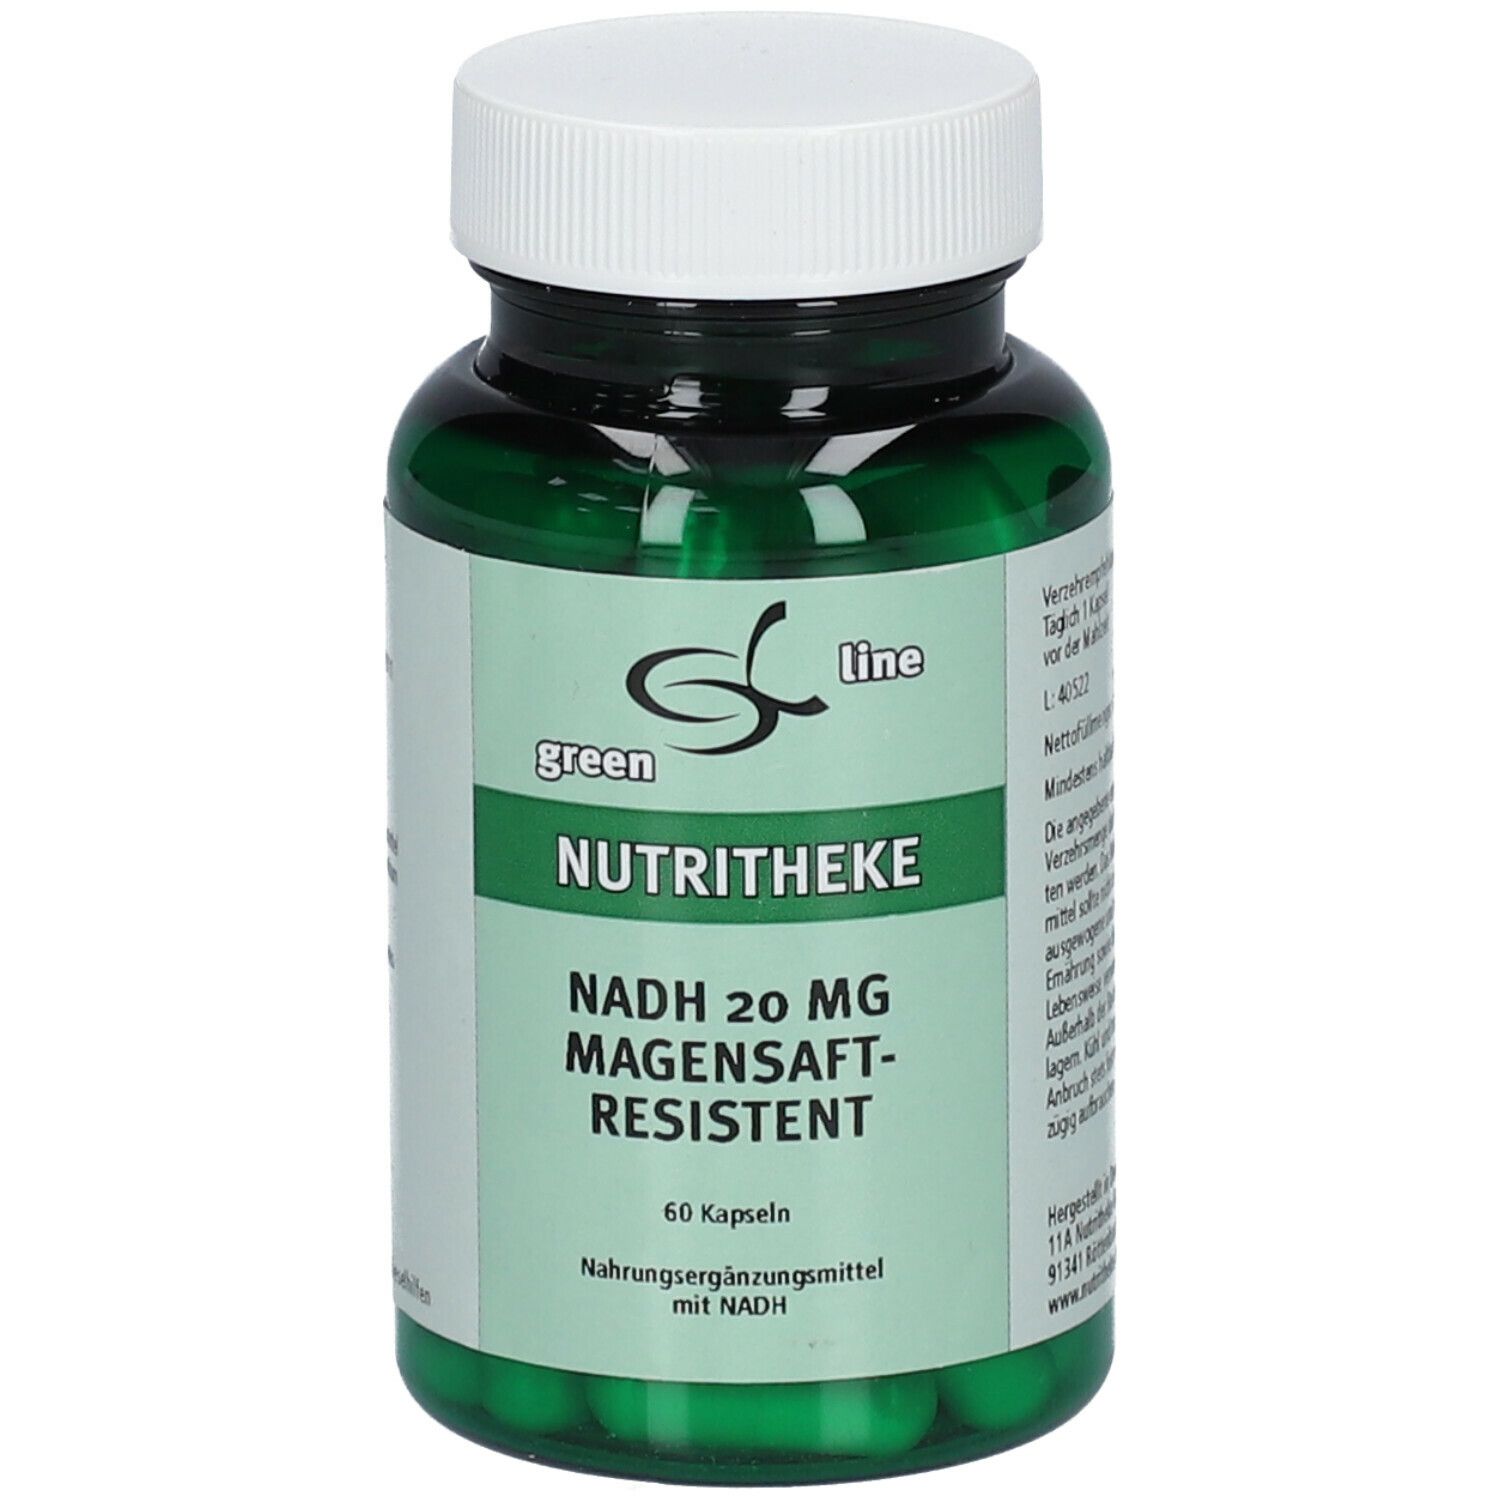 Nutritheke green line Nadh 20 mg